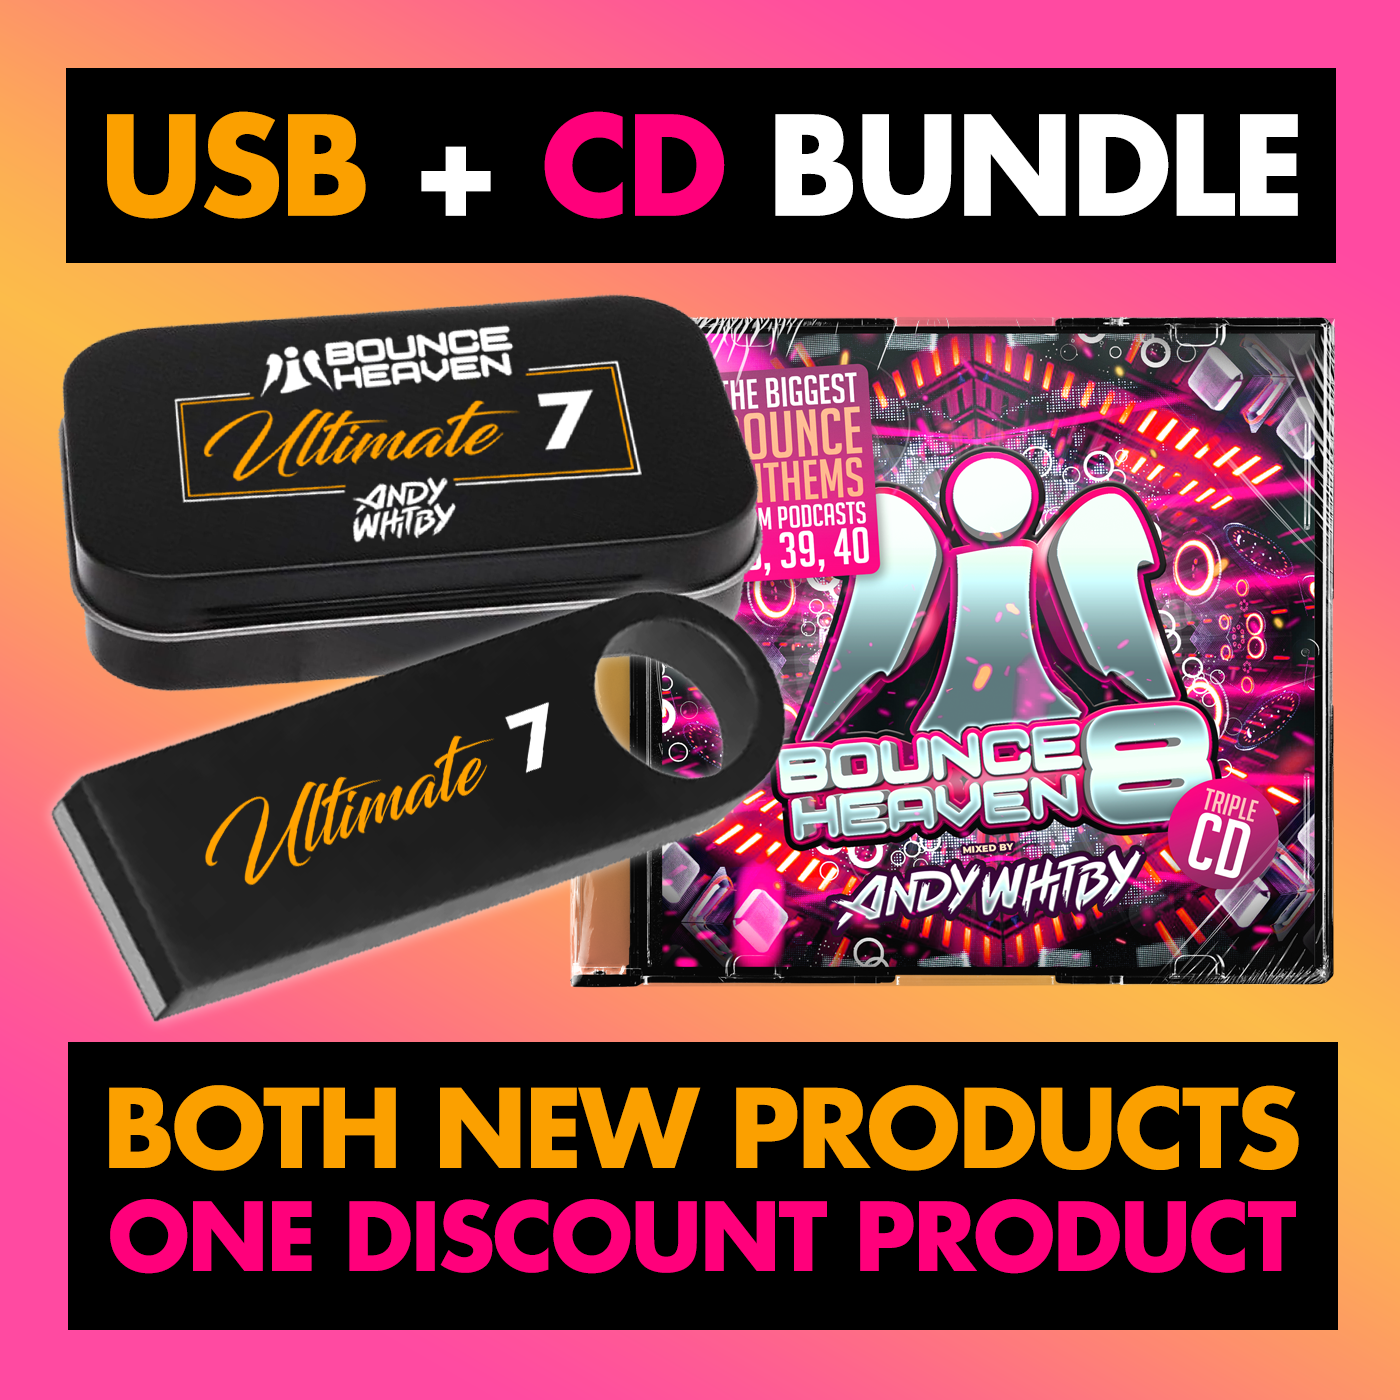 Ultimate 7 USB + CD8 Bundle